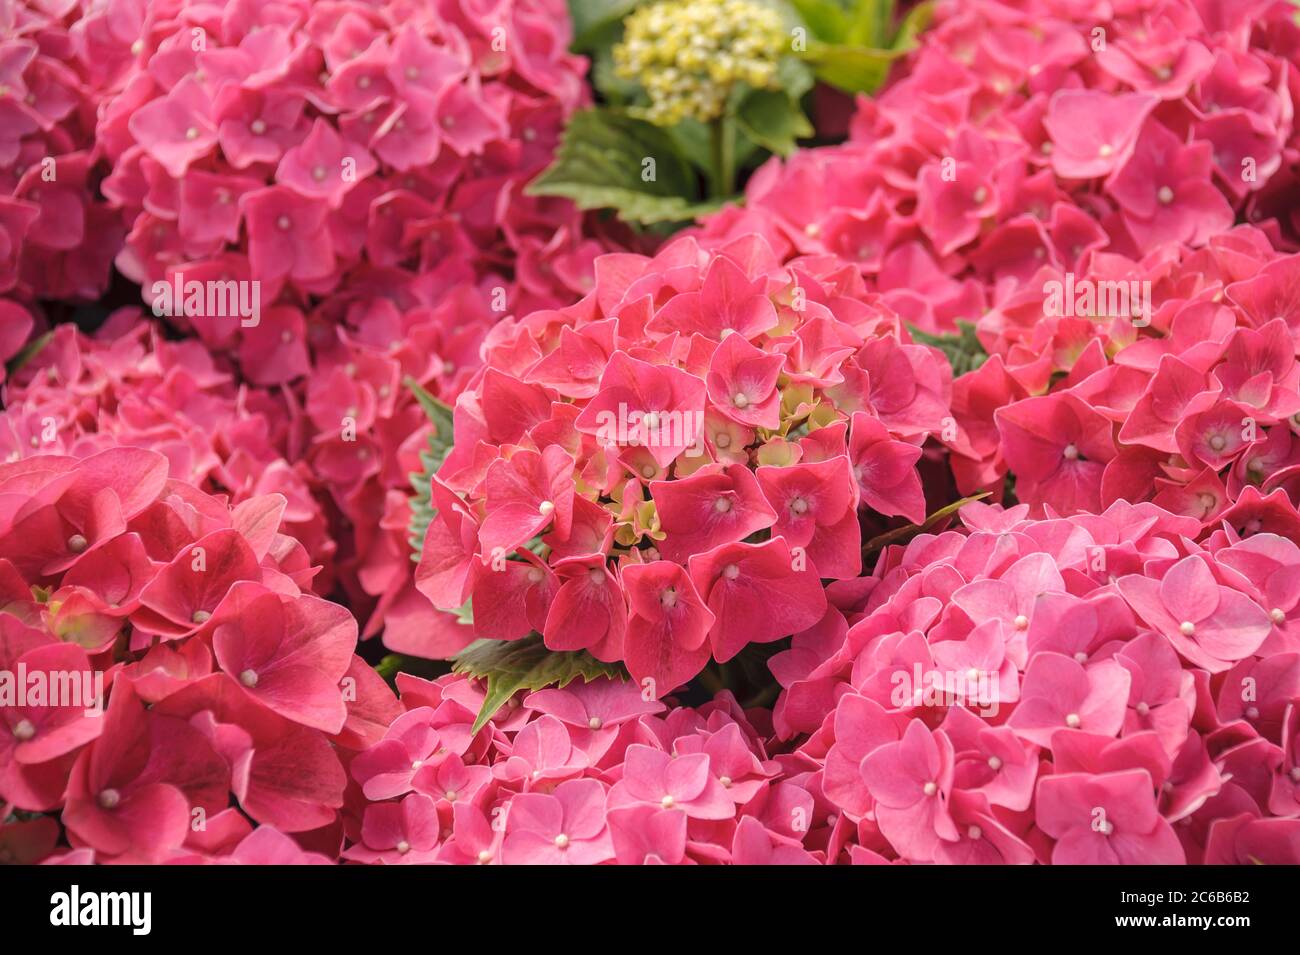 Garten-Hortensie Hydrangea, Hortensie, hortensia macrophylla Leuchtfeuer Stock Photo